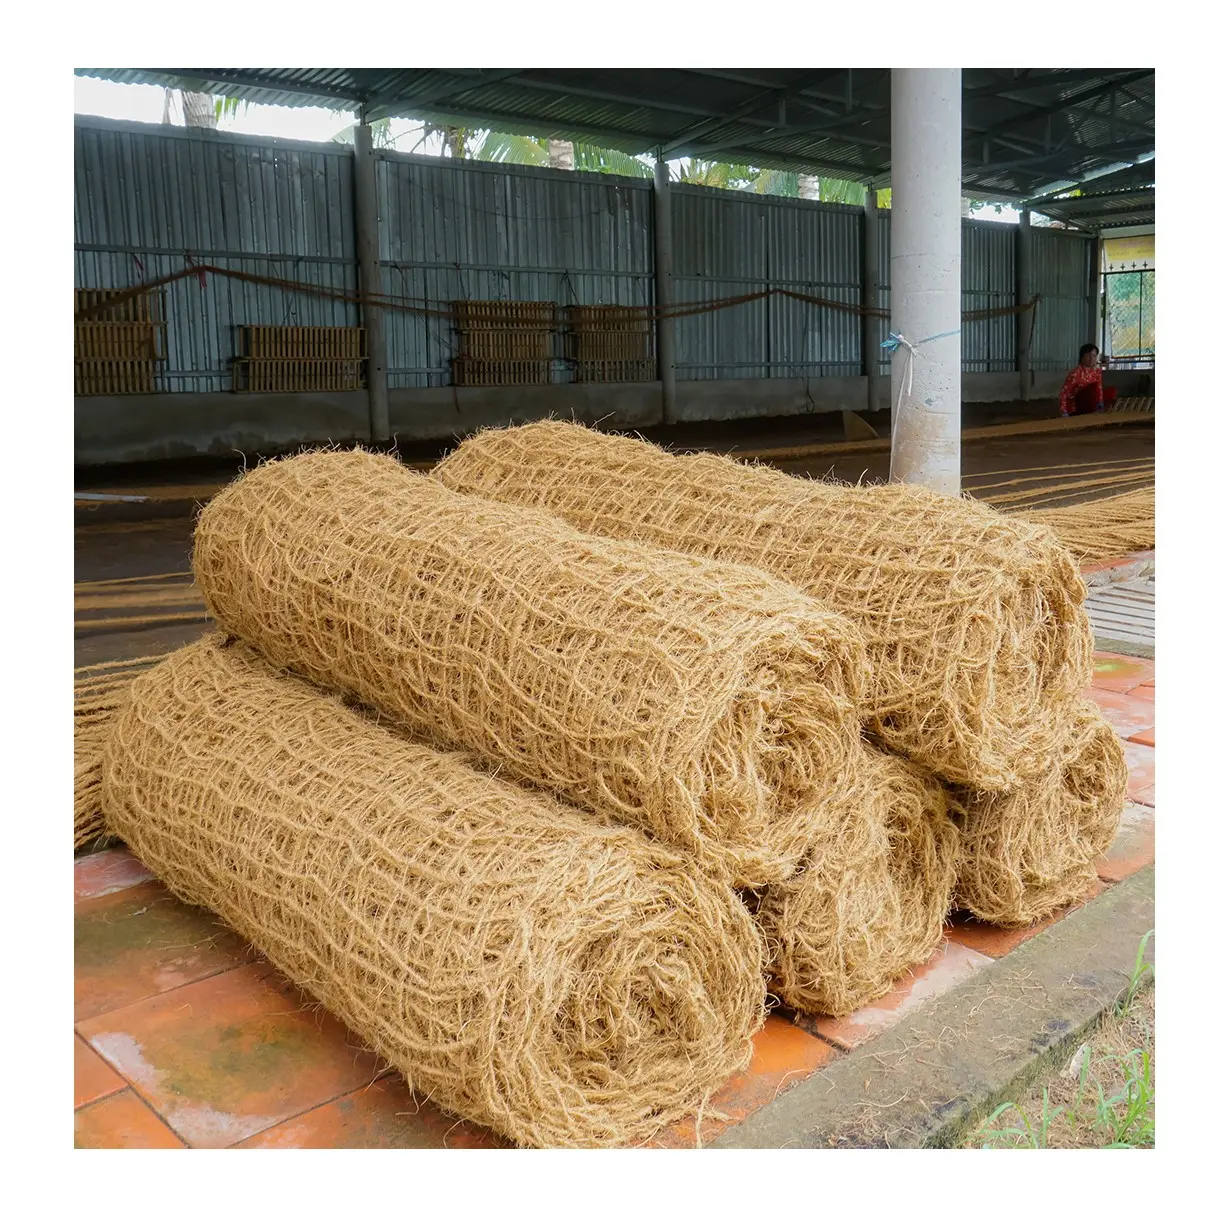 Geotextileココナッツコイア繊維ネット織りココロープメッシュネットベトナムの生態学的土壌ブランケット